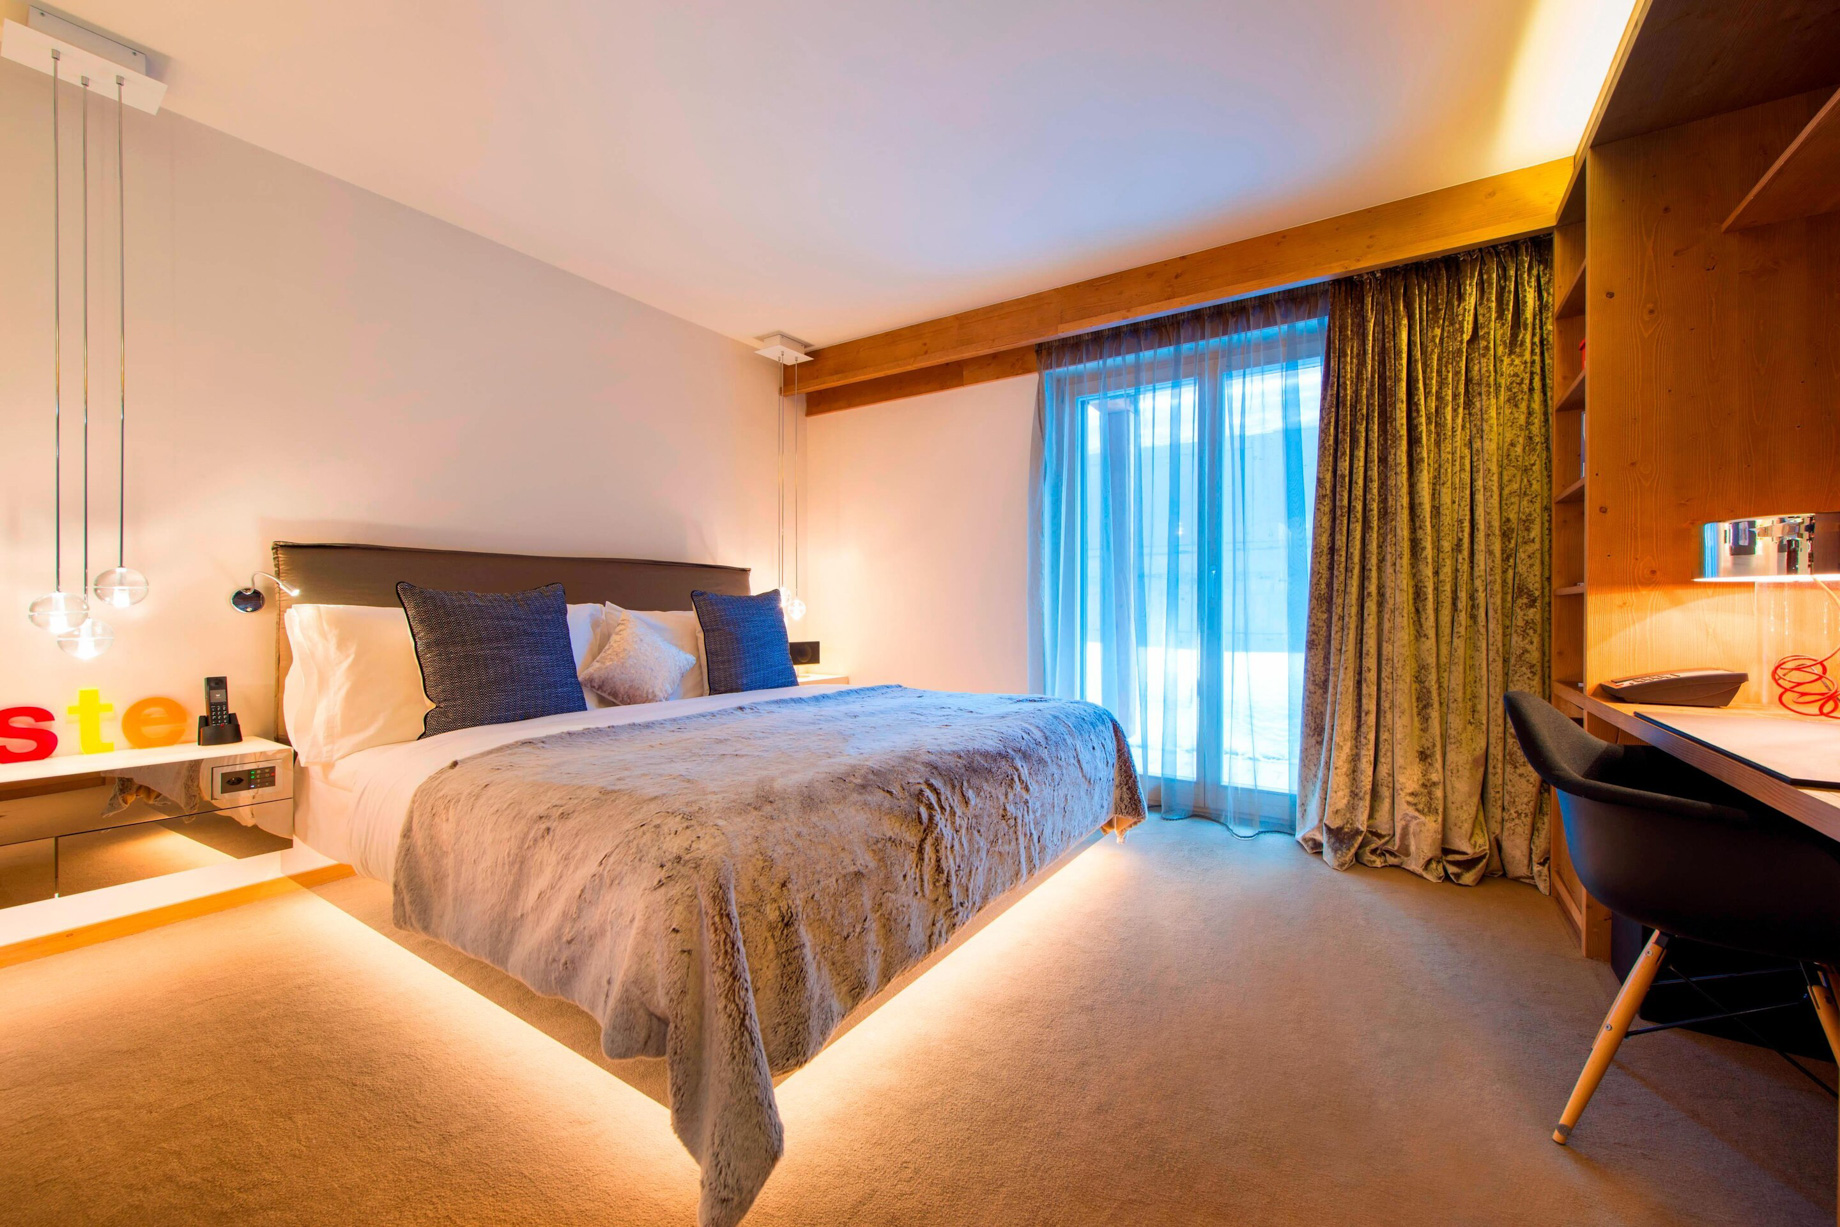 W Verbier Hotel – Verbier, Switzerland – Residence Bedroom Style